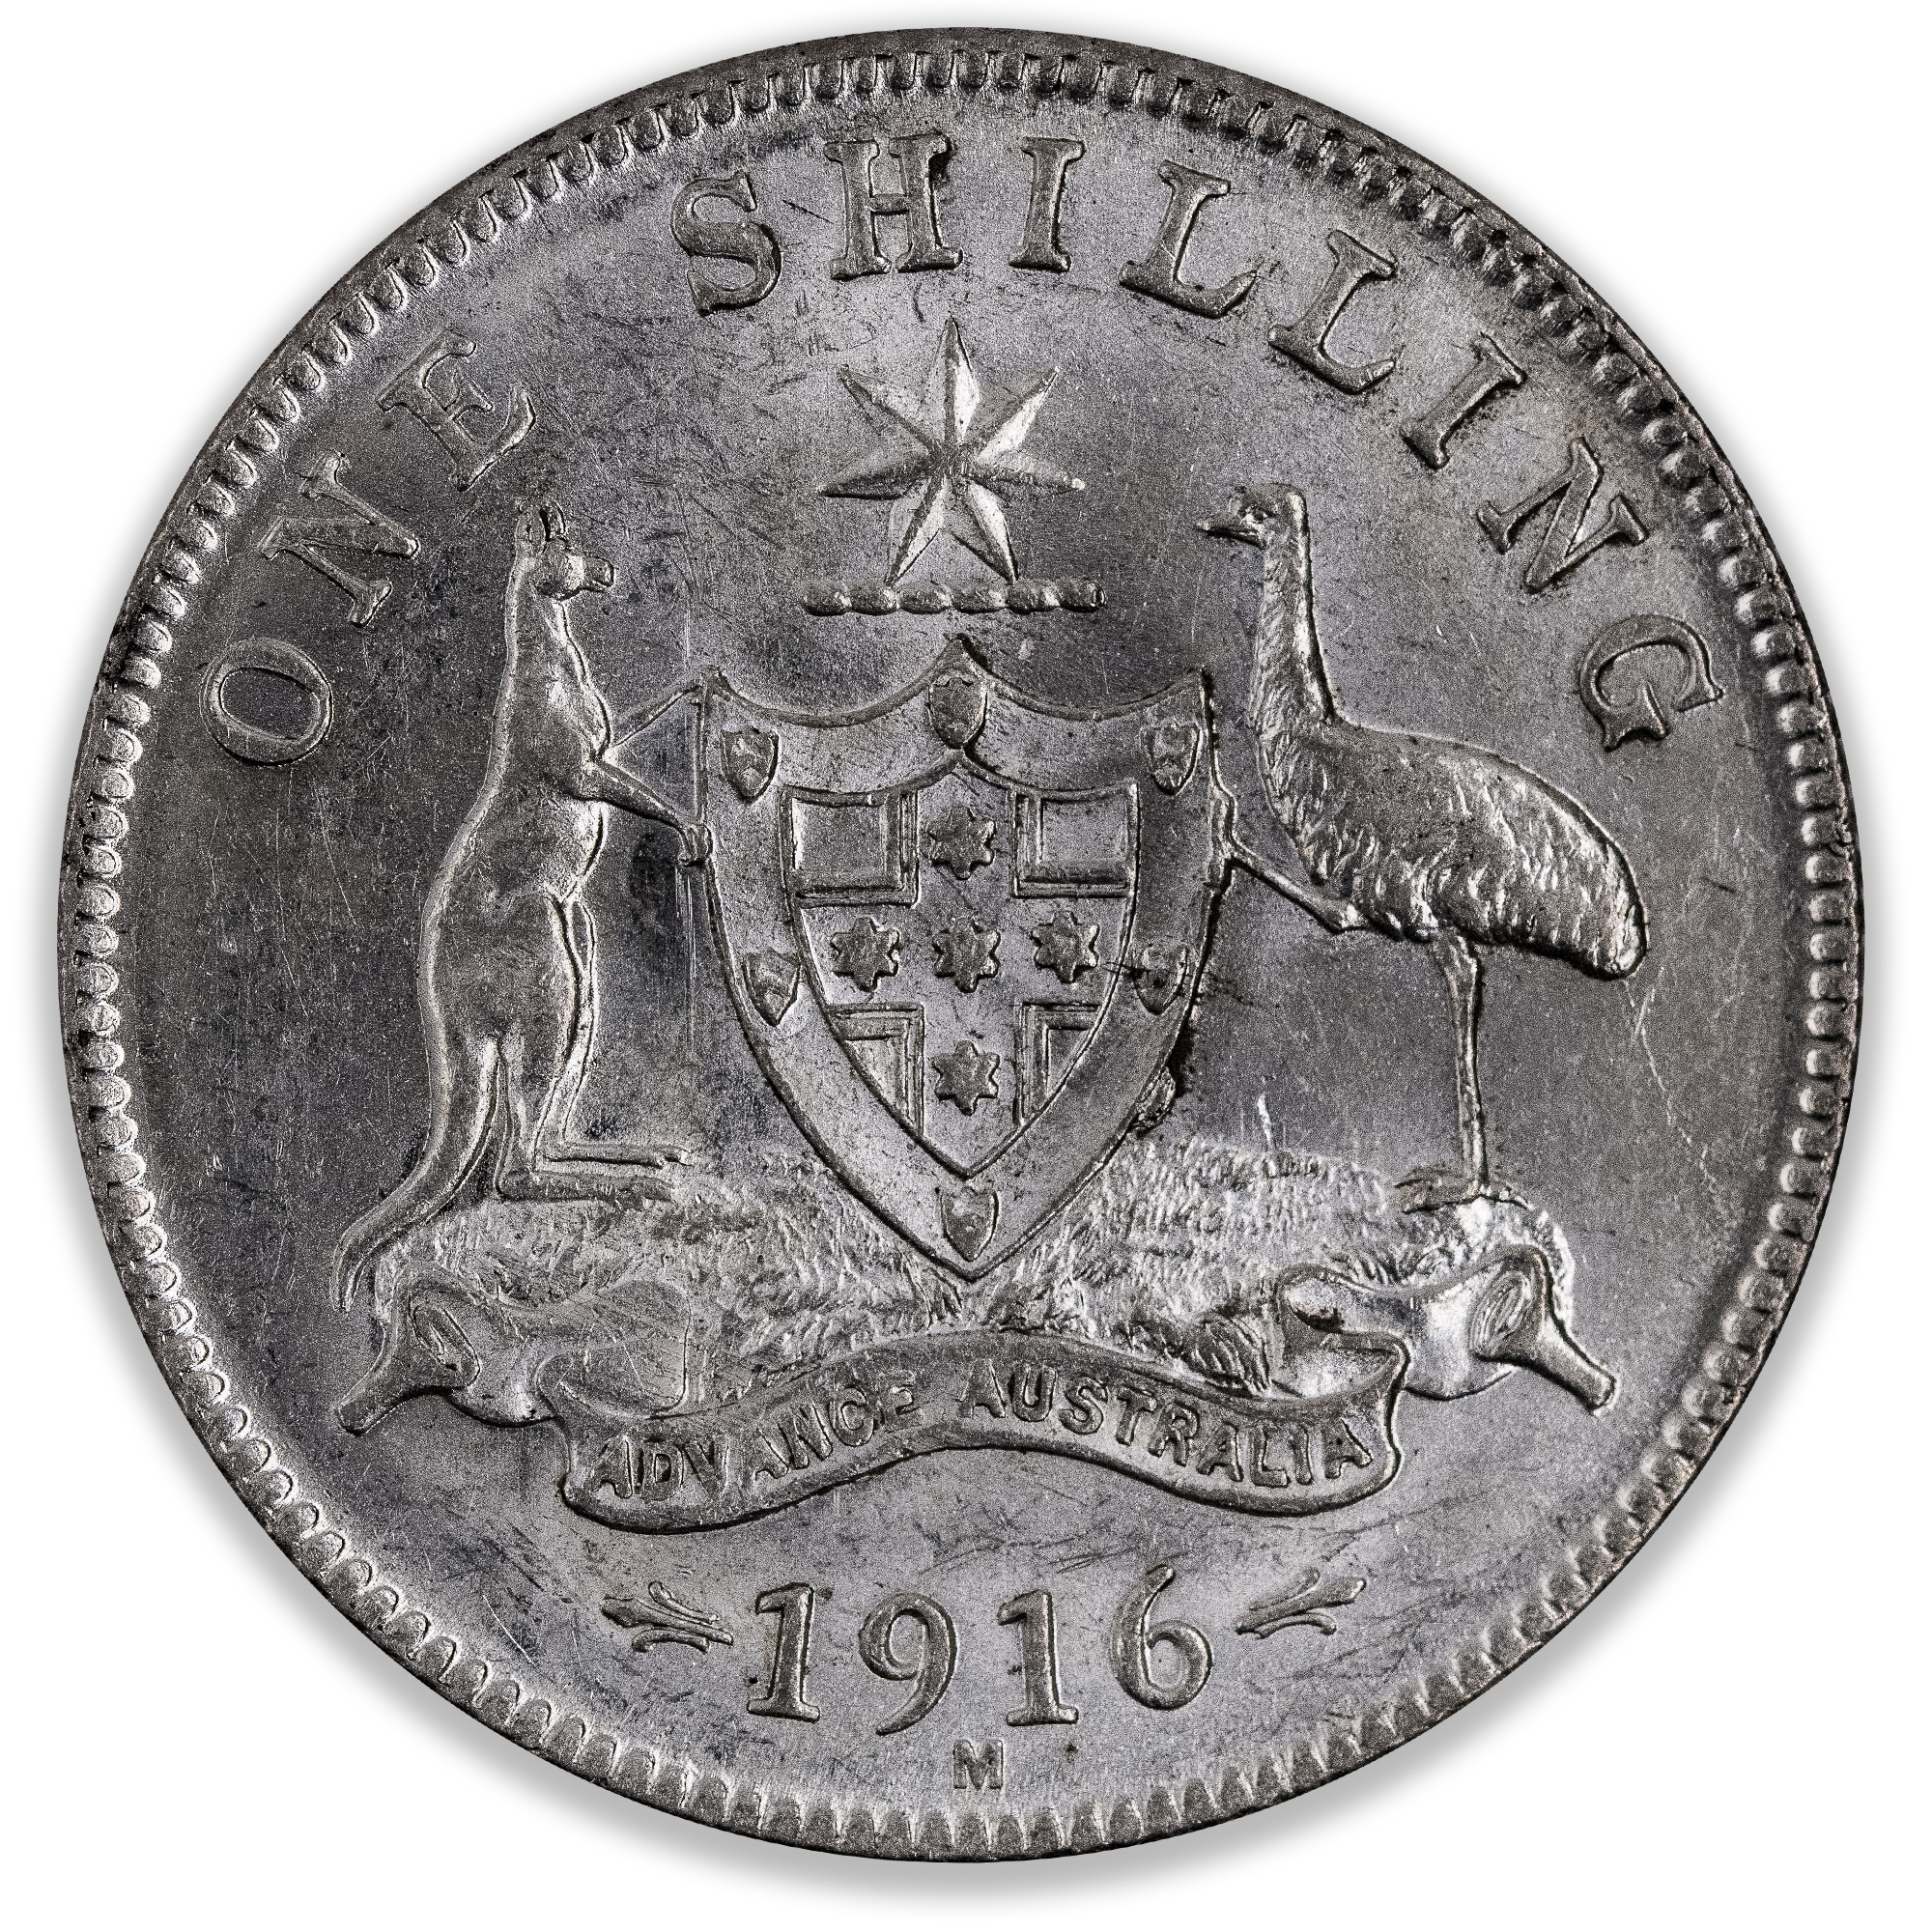 1916 Australian Shilling Nice Extra Fine +